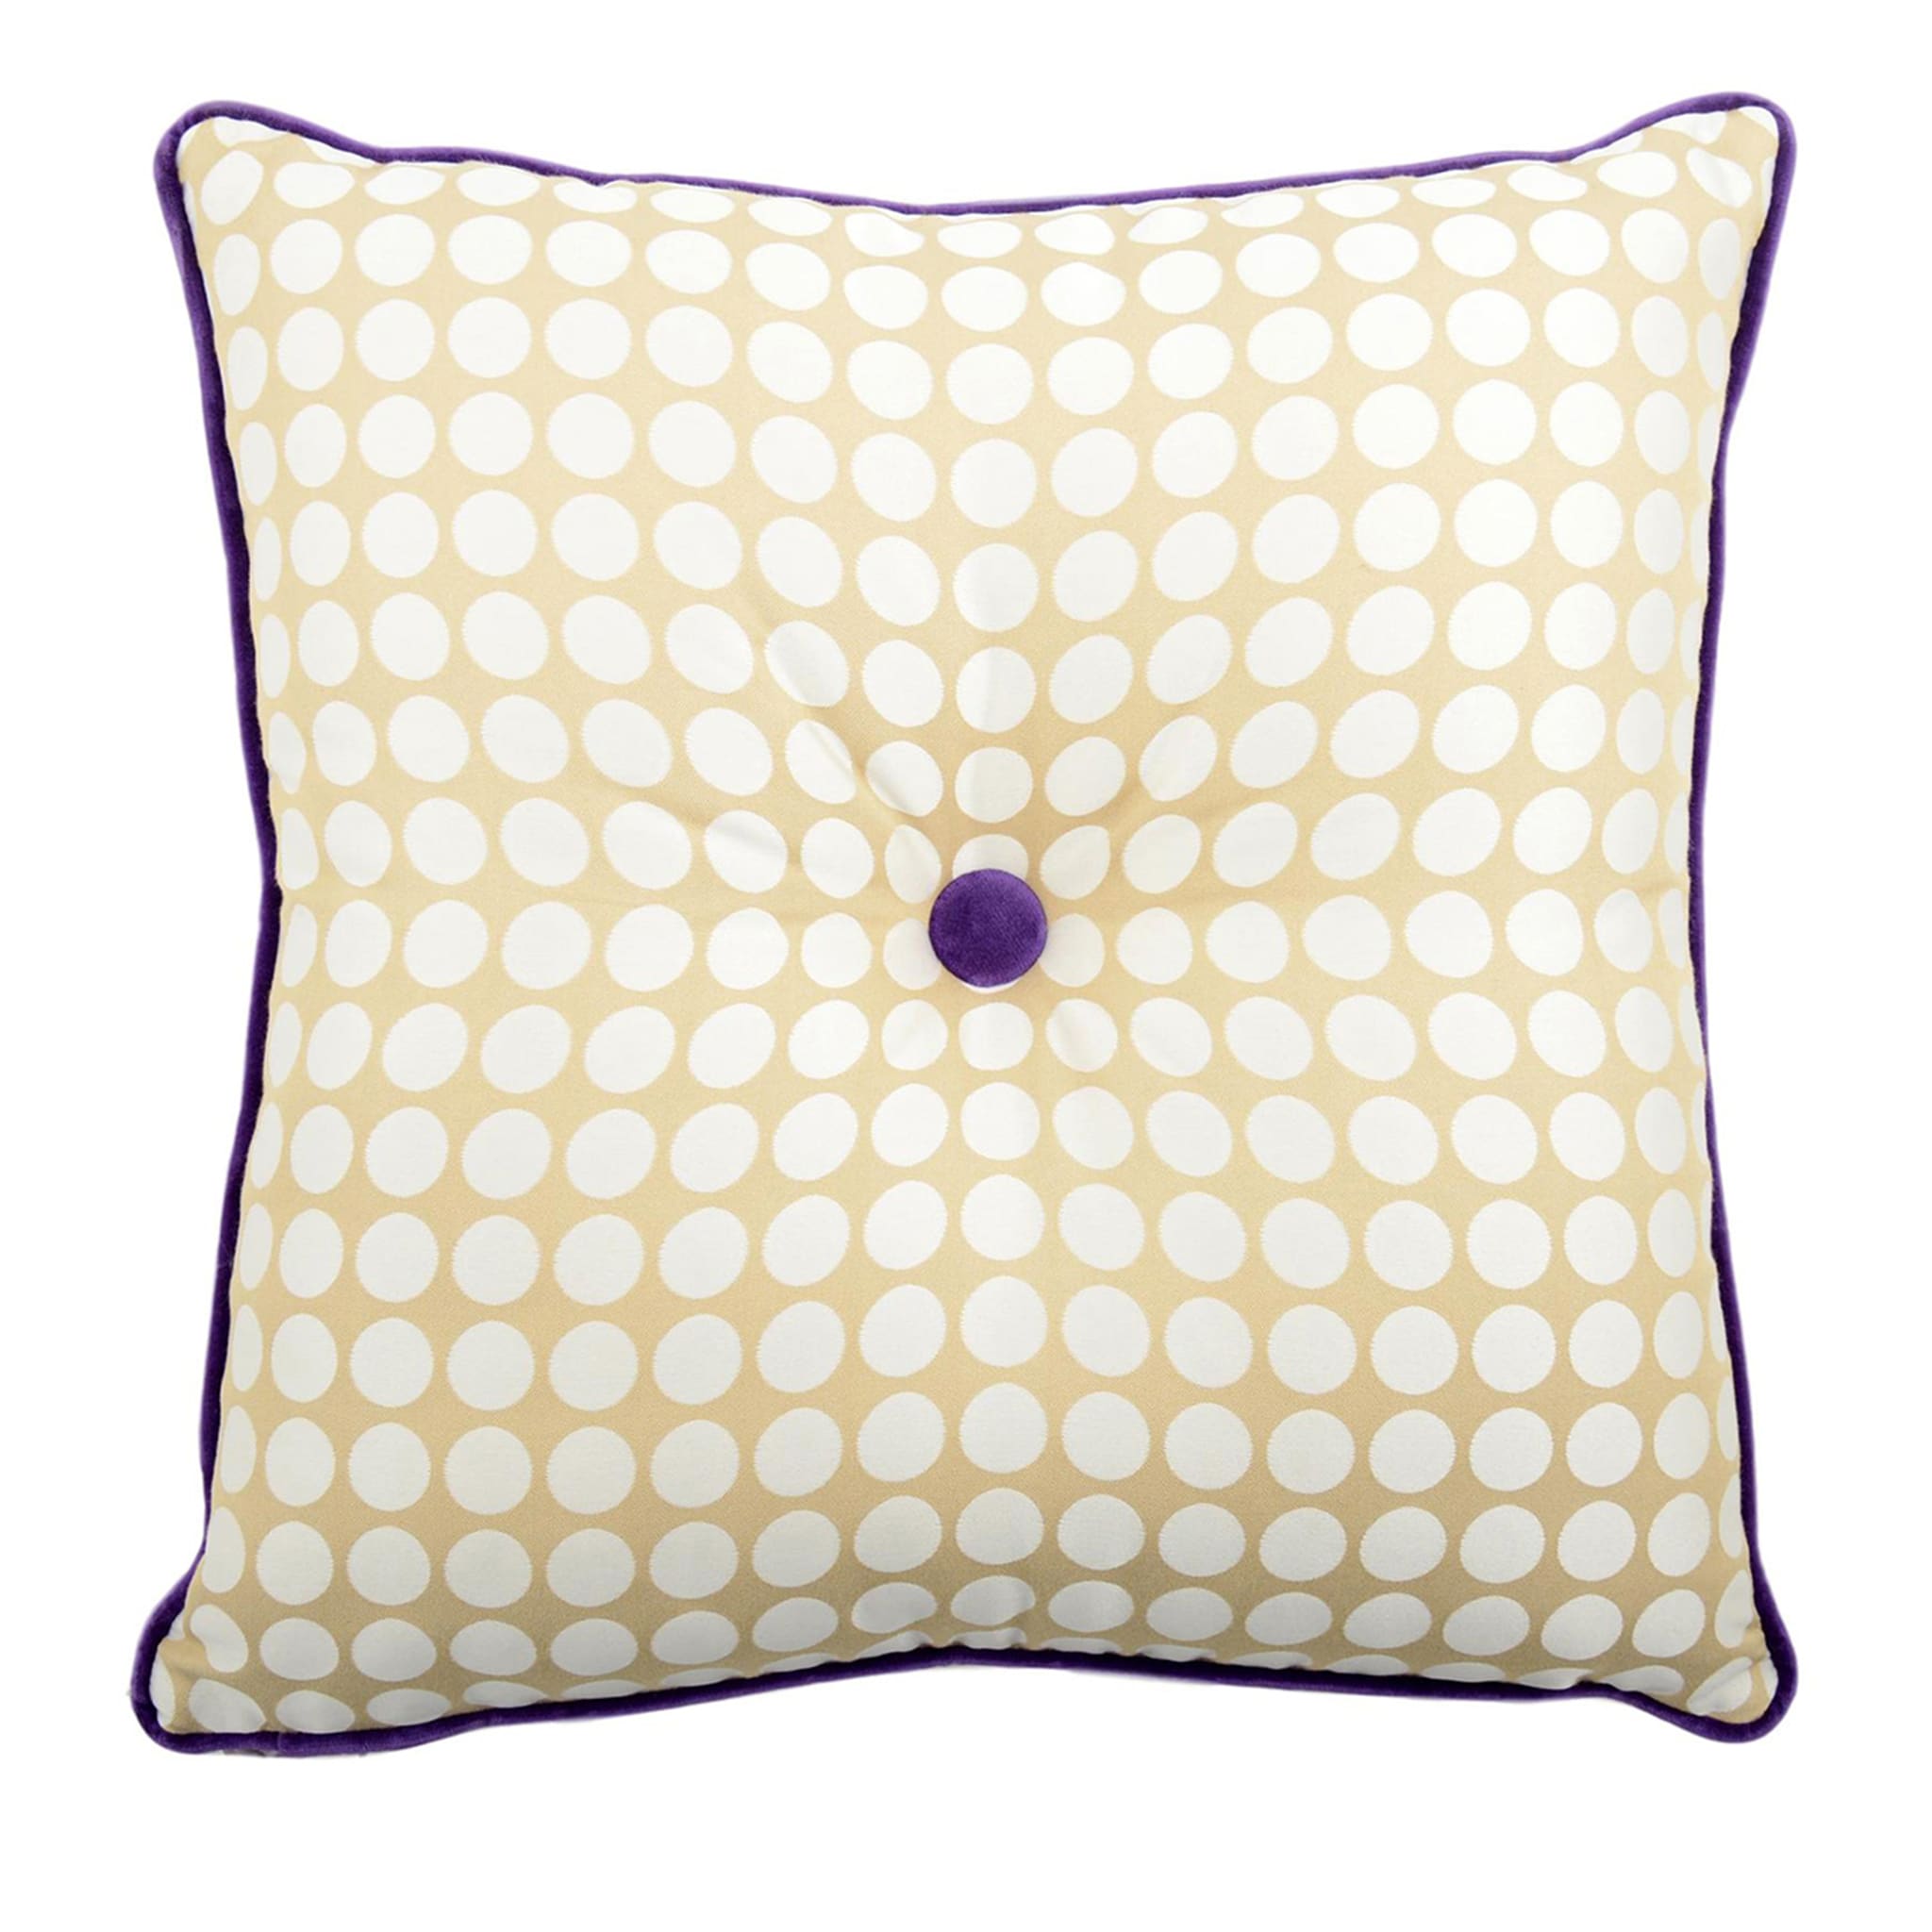 Beige Carrè Cushion in Polka Dots Jacquard Fabric - Main view